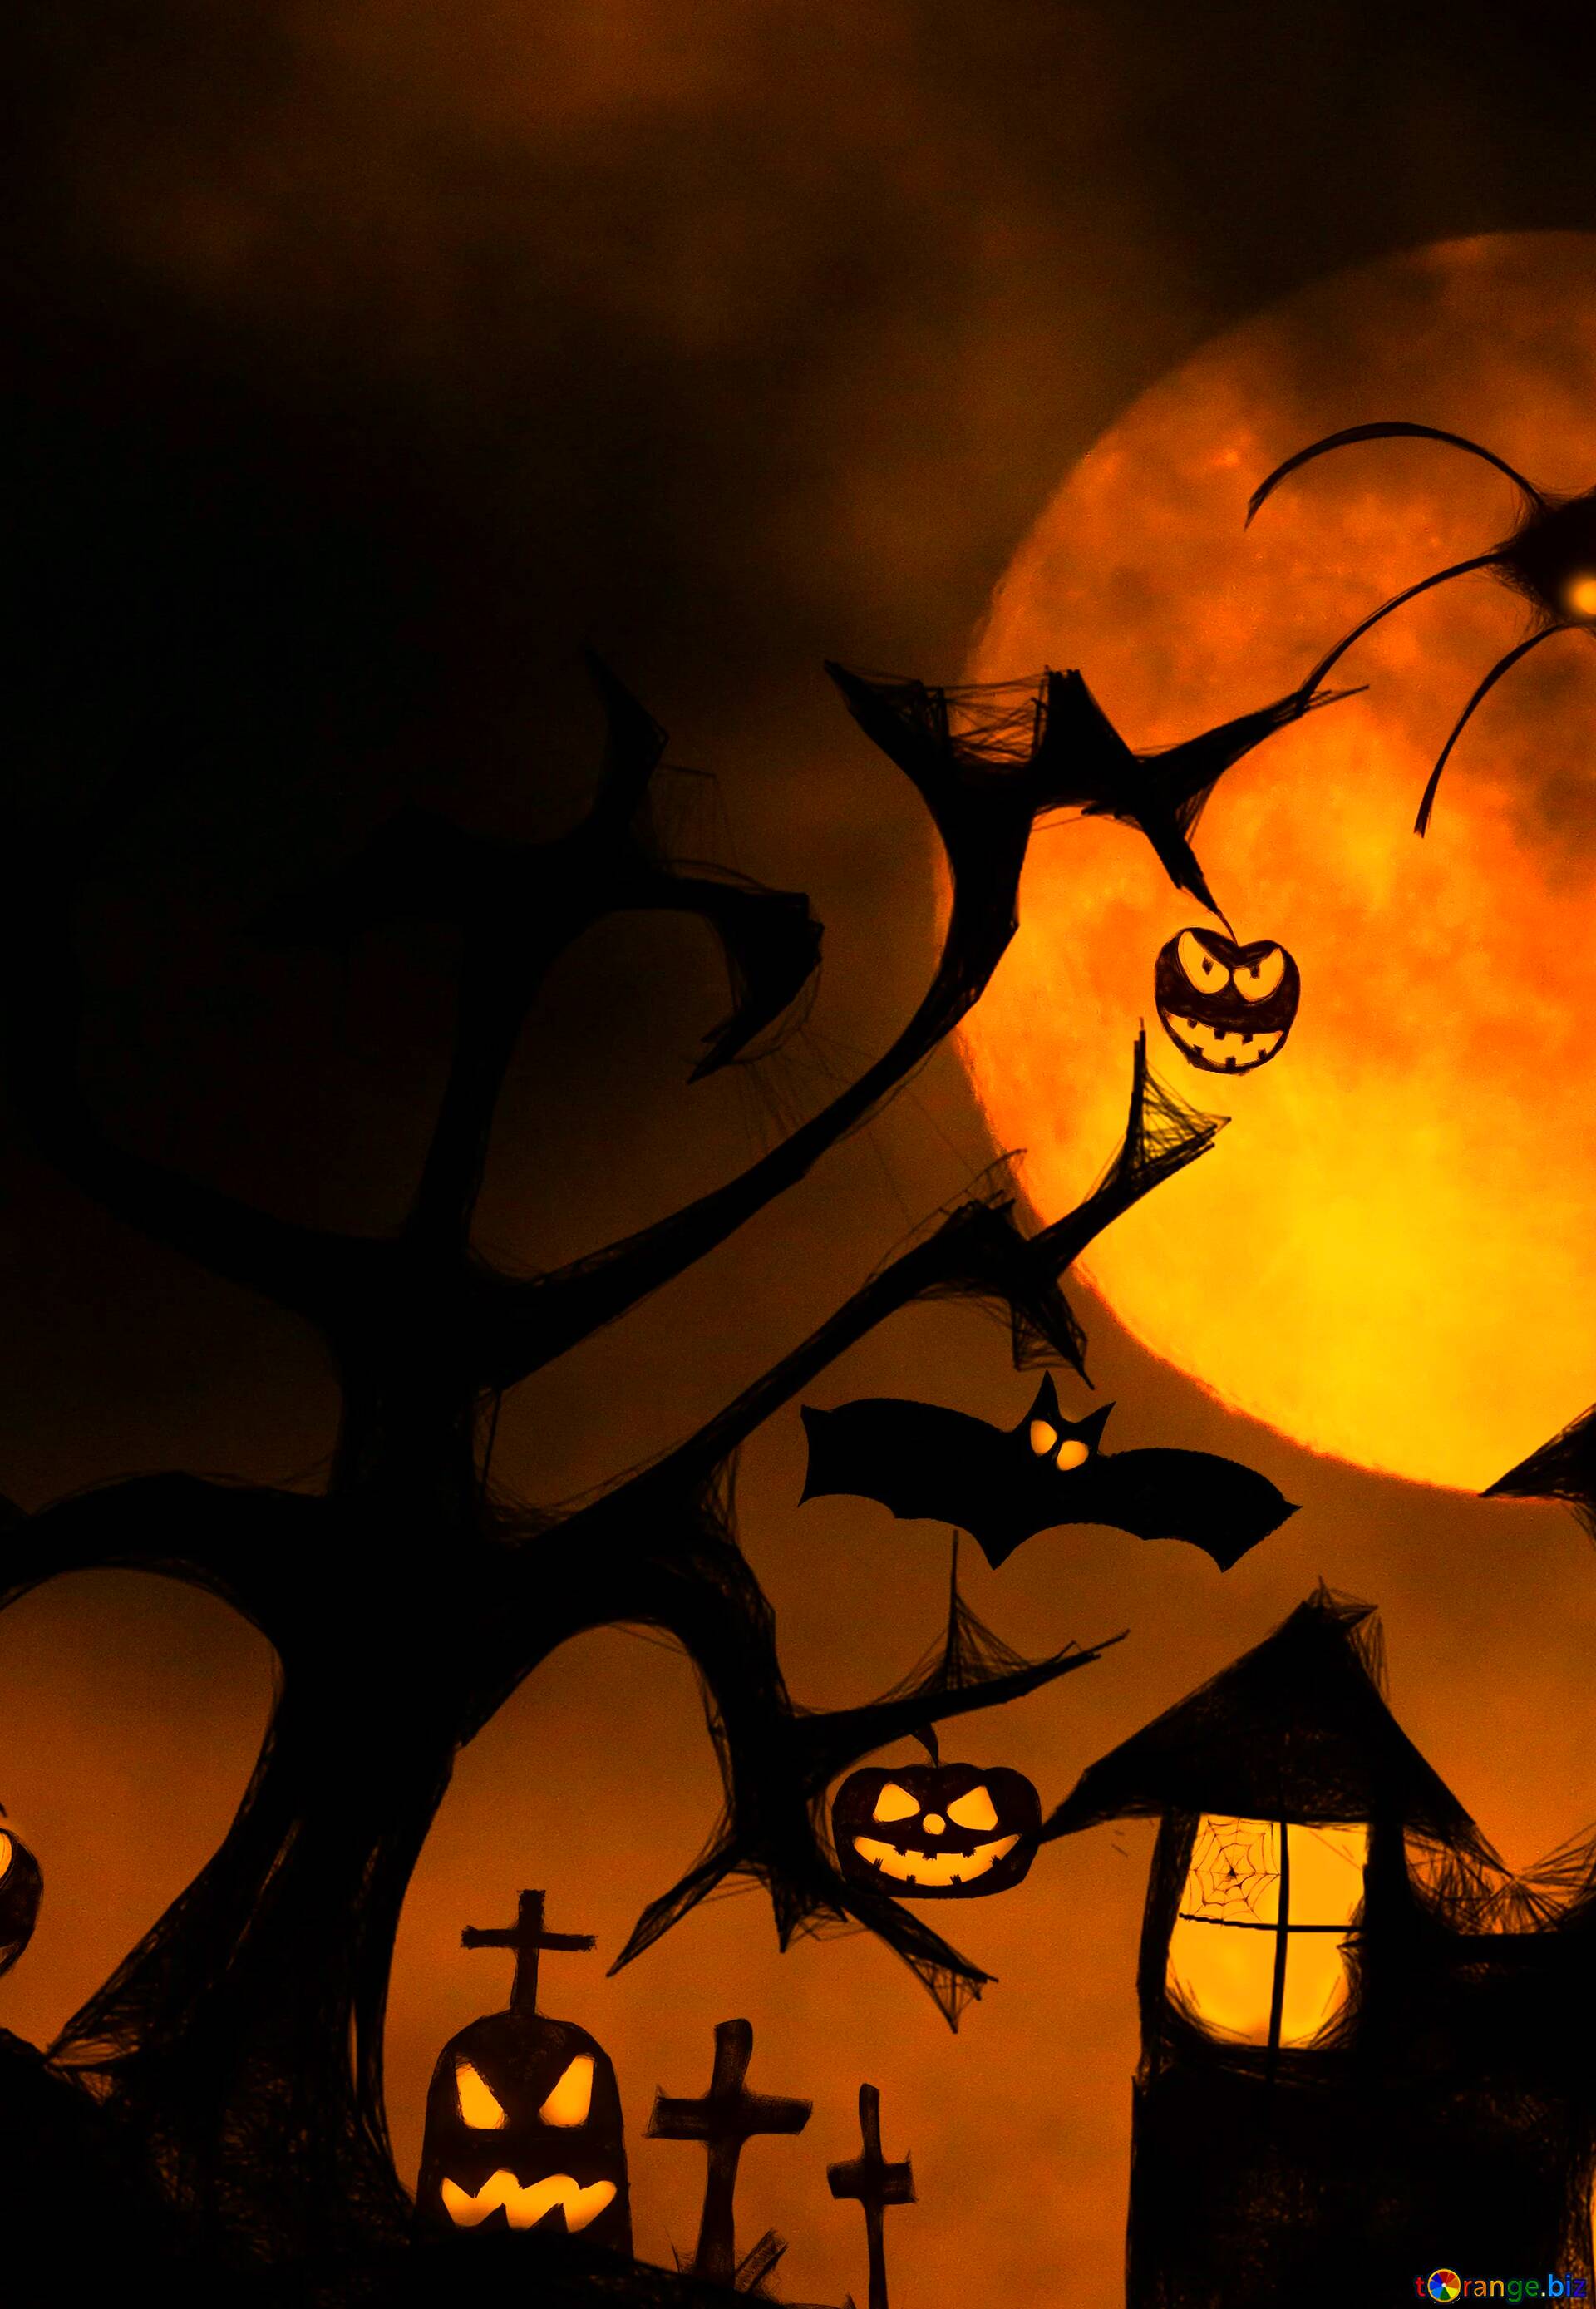 Download Free Picture Halloween Wallpaper For Mobile Desktop On CC BY License Free Image Stock TOrange.biz Fx №6791